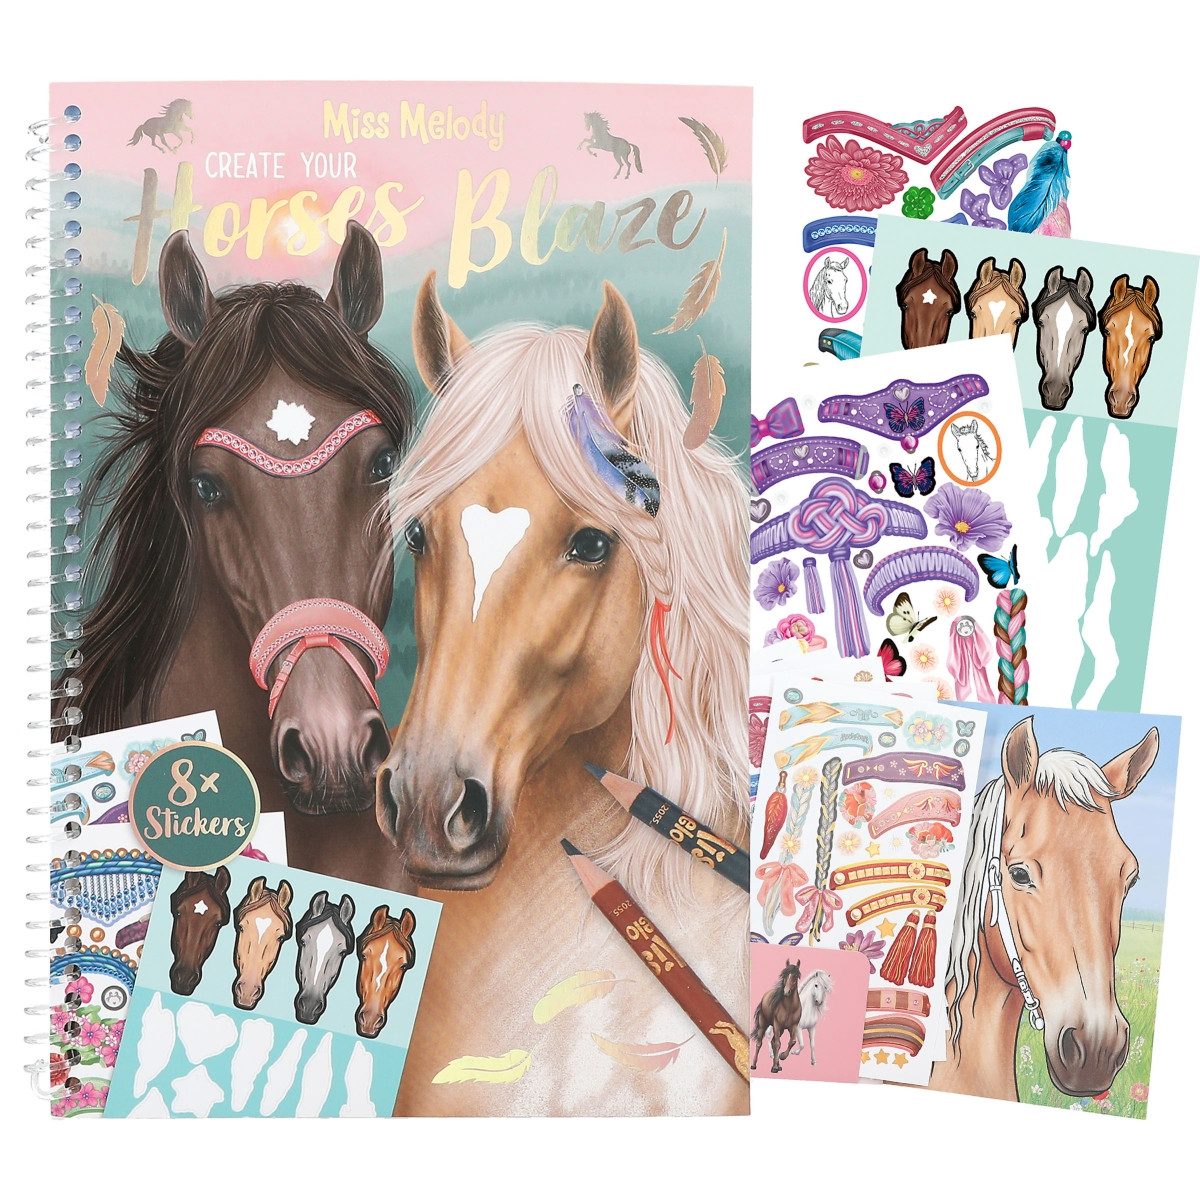 Depesche Malvorlage Miss Melody Horses Blaze Pferde Malbuch Buch inkl. Sticker Ausmalbuch